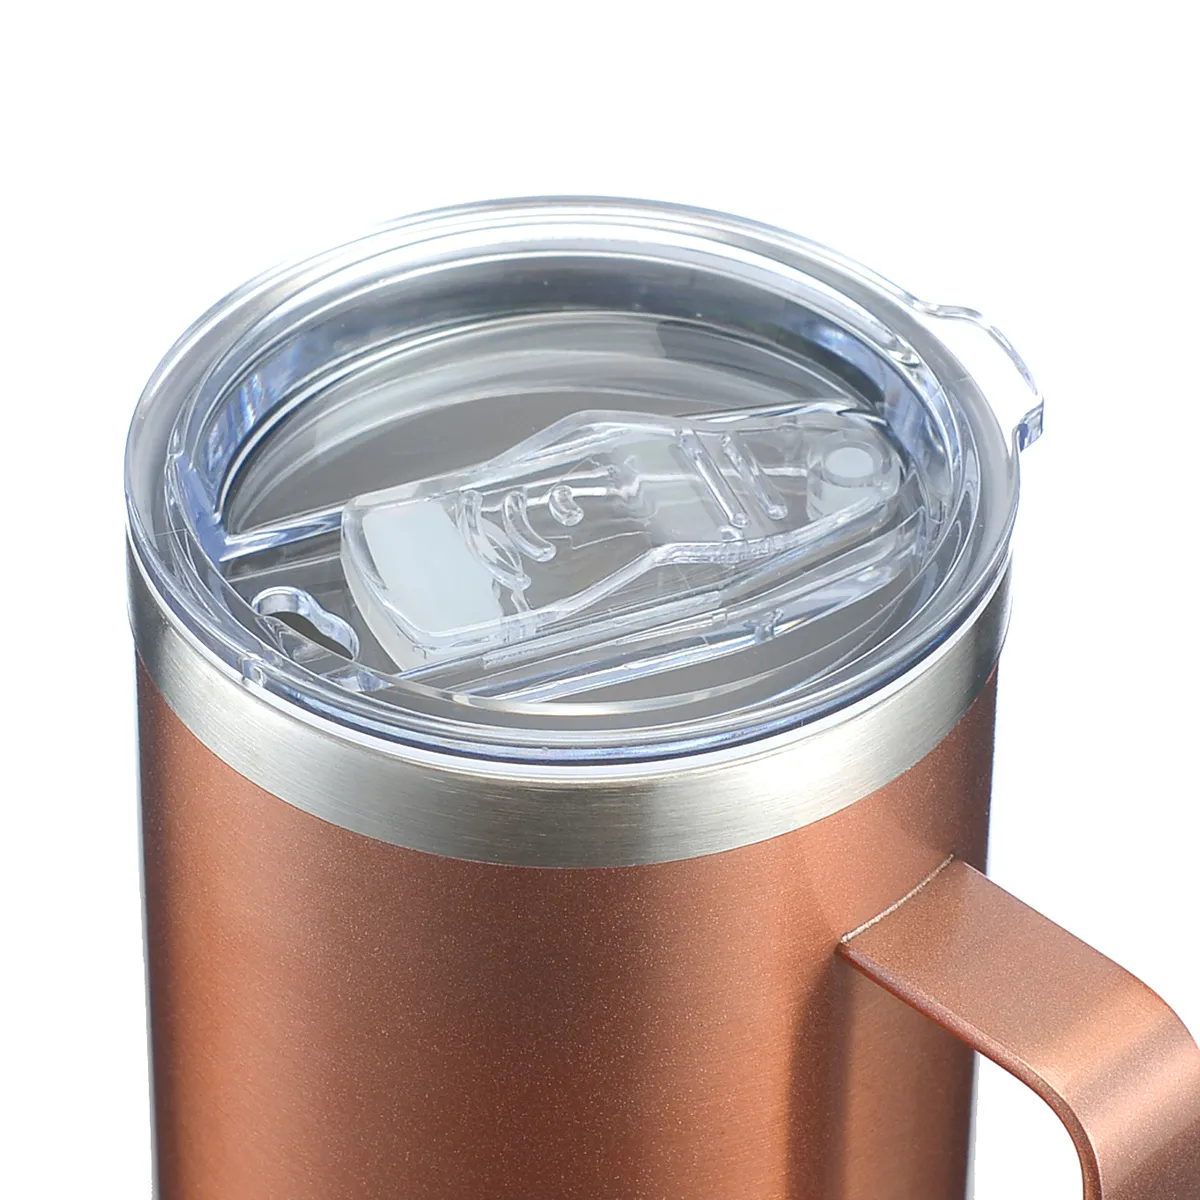 Travel Coffee Mug With Lid Insulated Tumbler With Handle 24oz